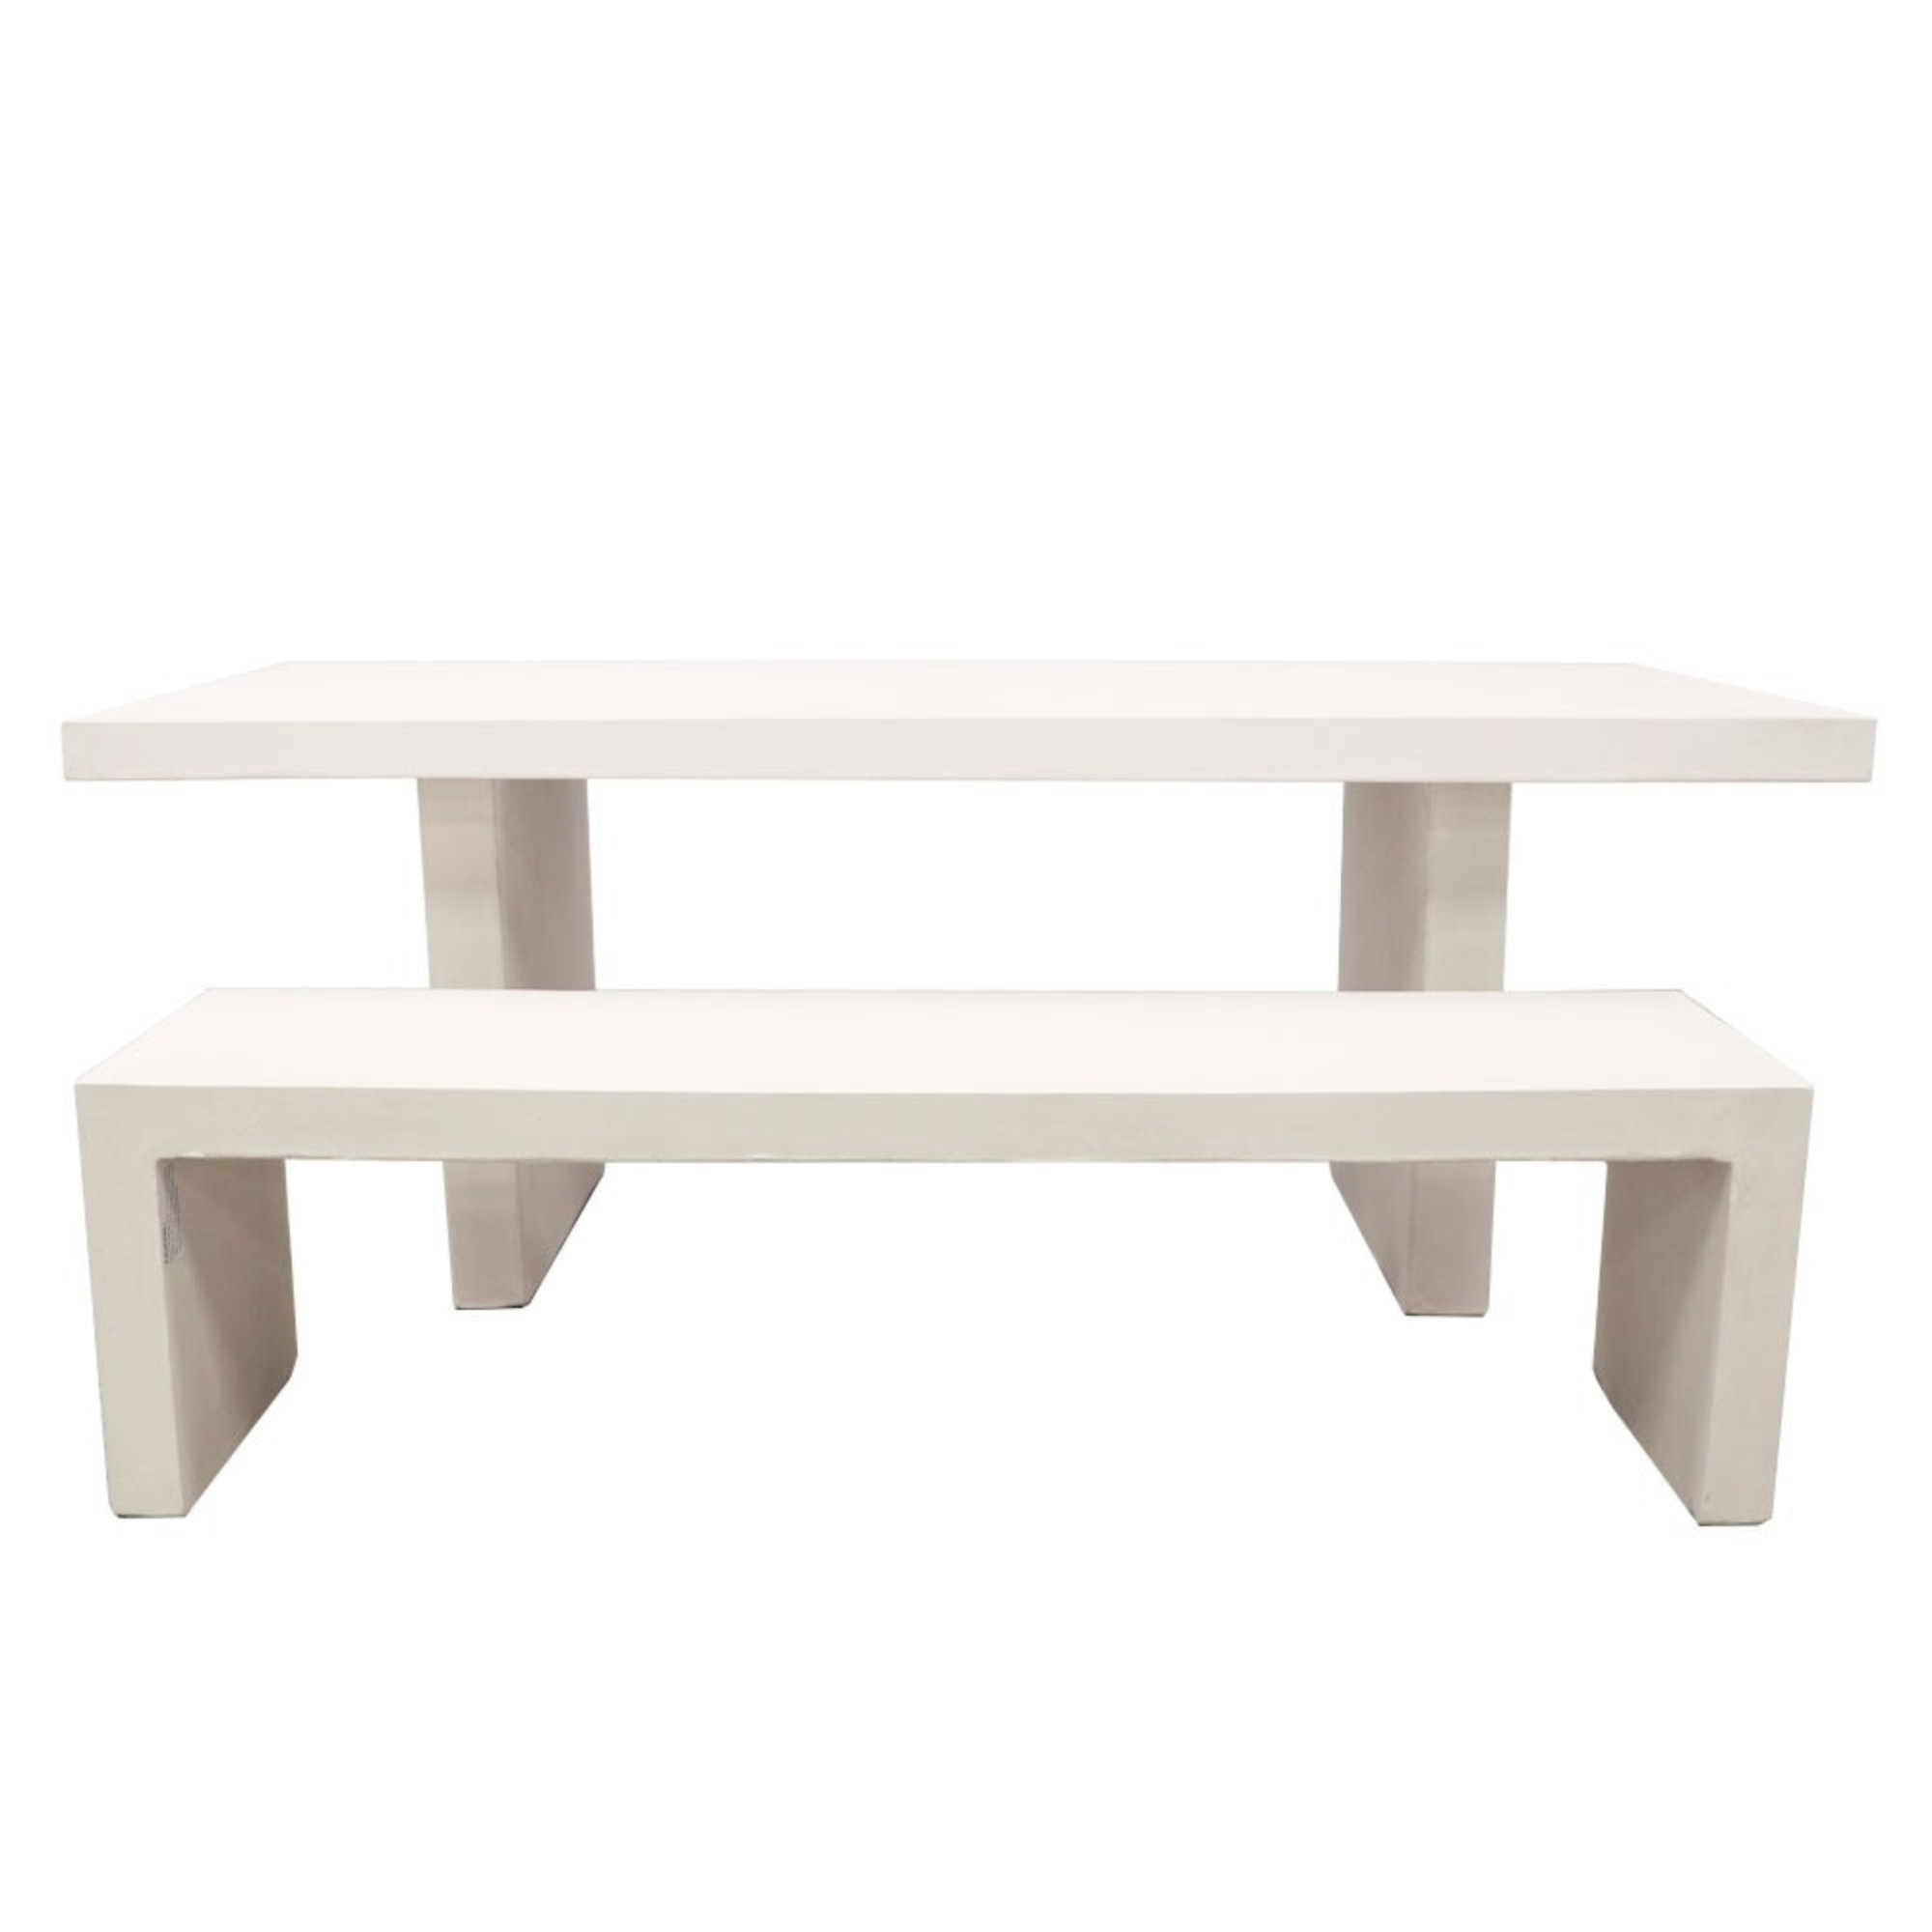 PALMA OUTDOOR CONCRETE TABLE | WHITE OR GREY